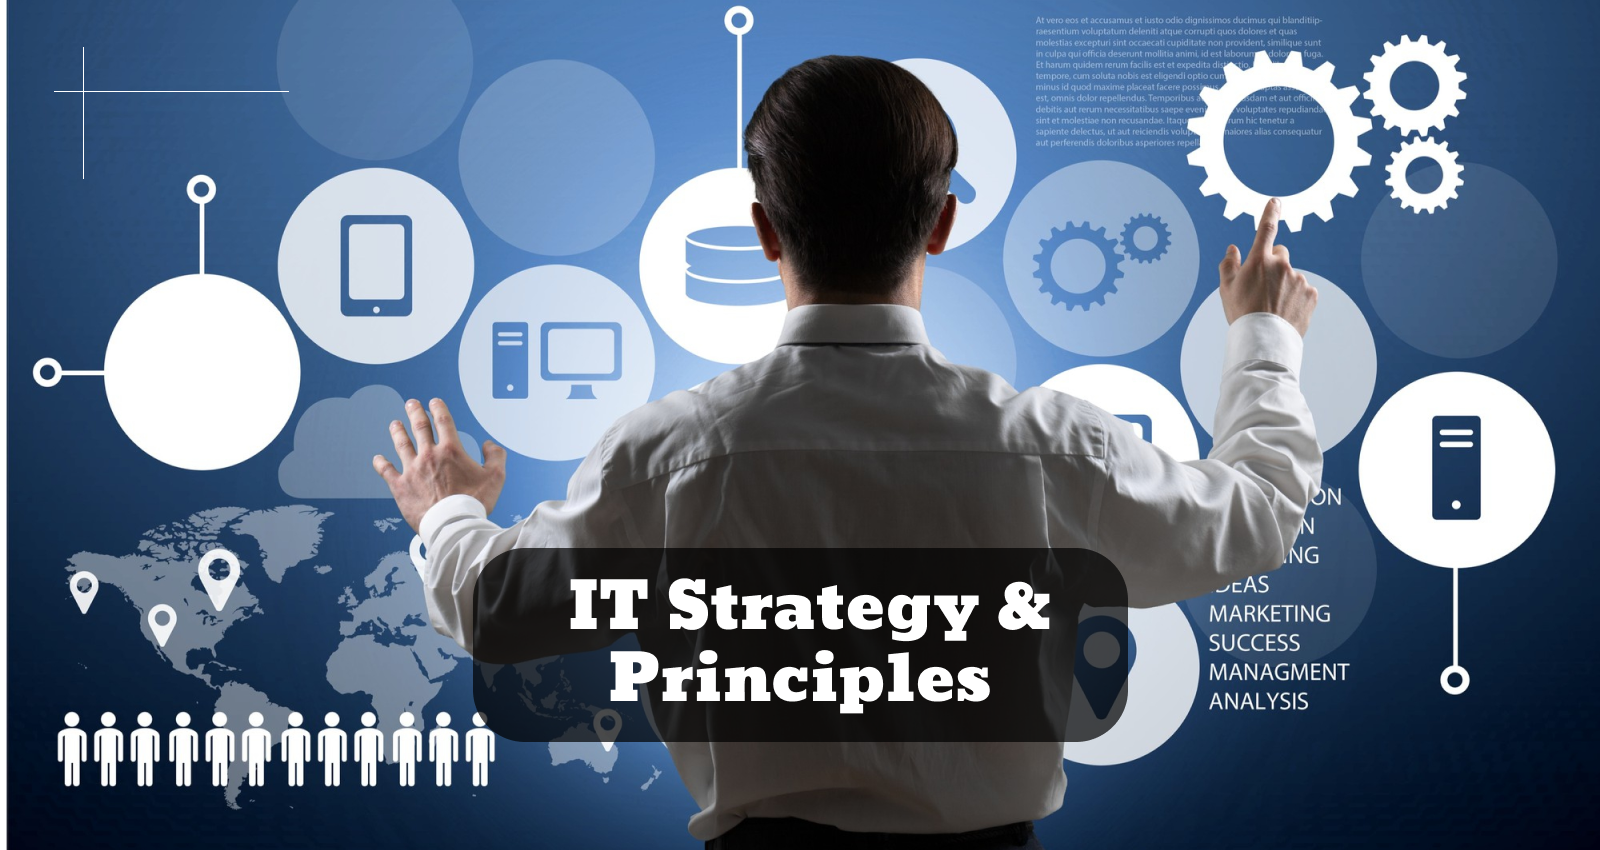 IT Strategy, Information Technology, Information Technology Strategy, IT Principles, IT Strategy Benefits, Need of IT Strategy, What is IT Strategy, IT Strategy Importance, Why Need IT Strategy